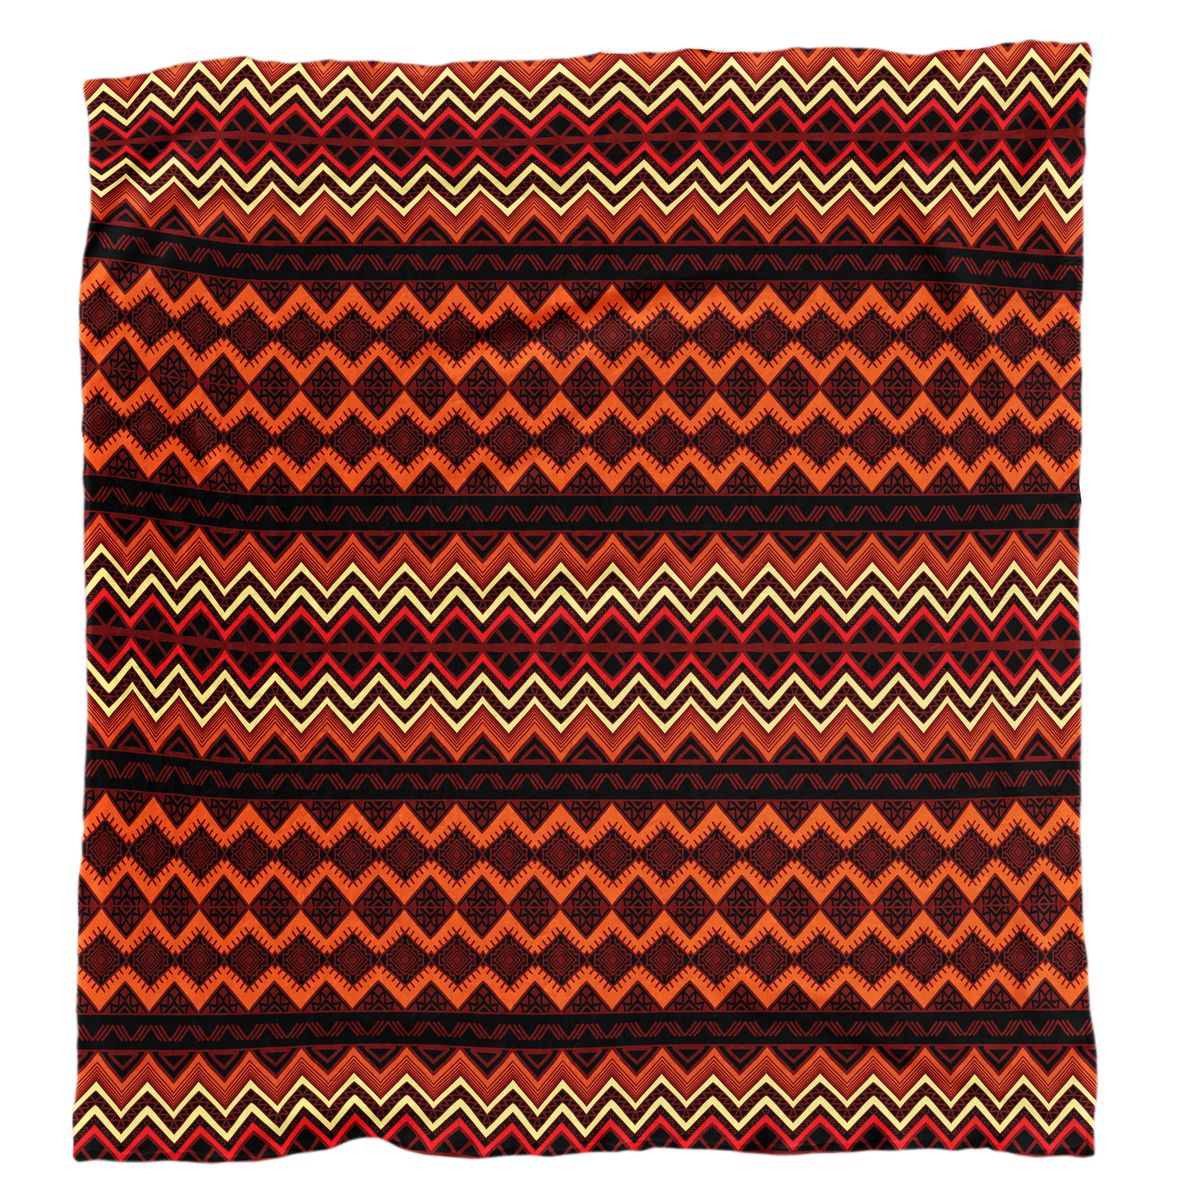 African Pattern Colourful Waves Light Weight Fleece Blanket